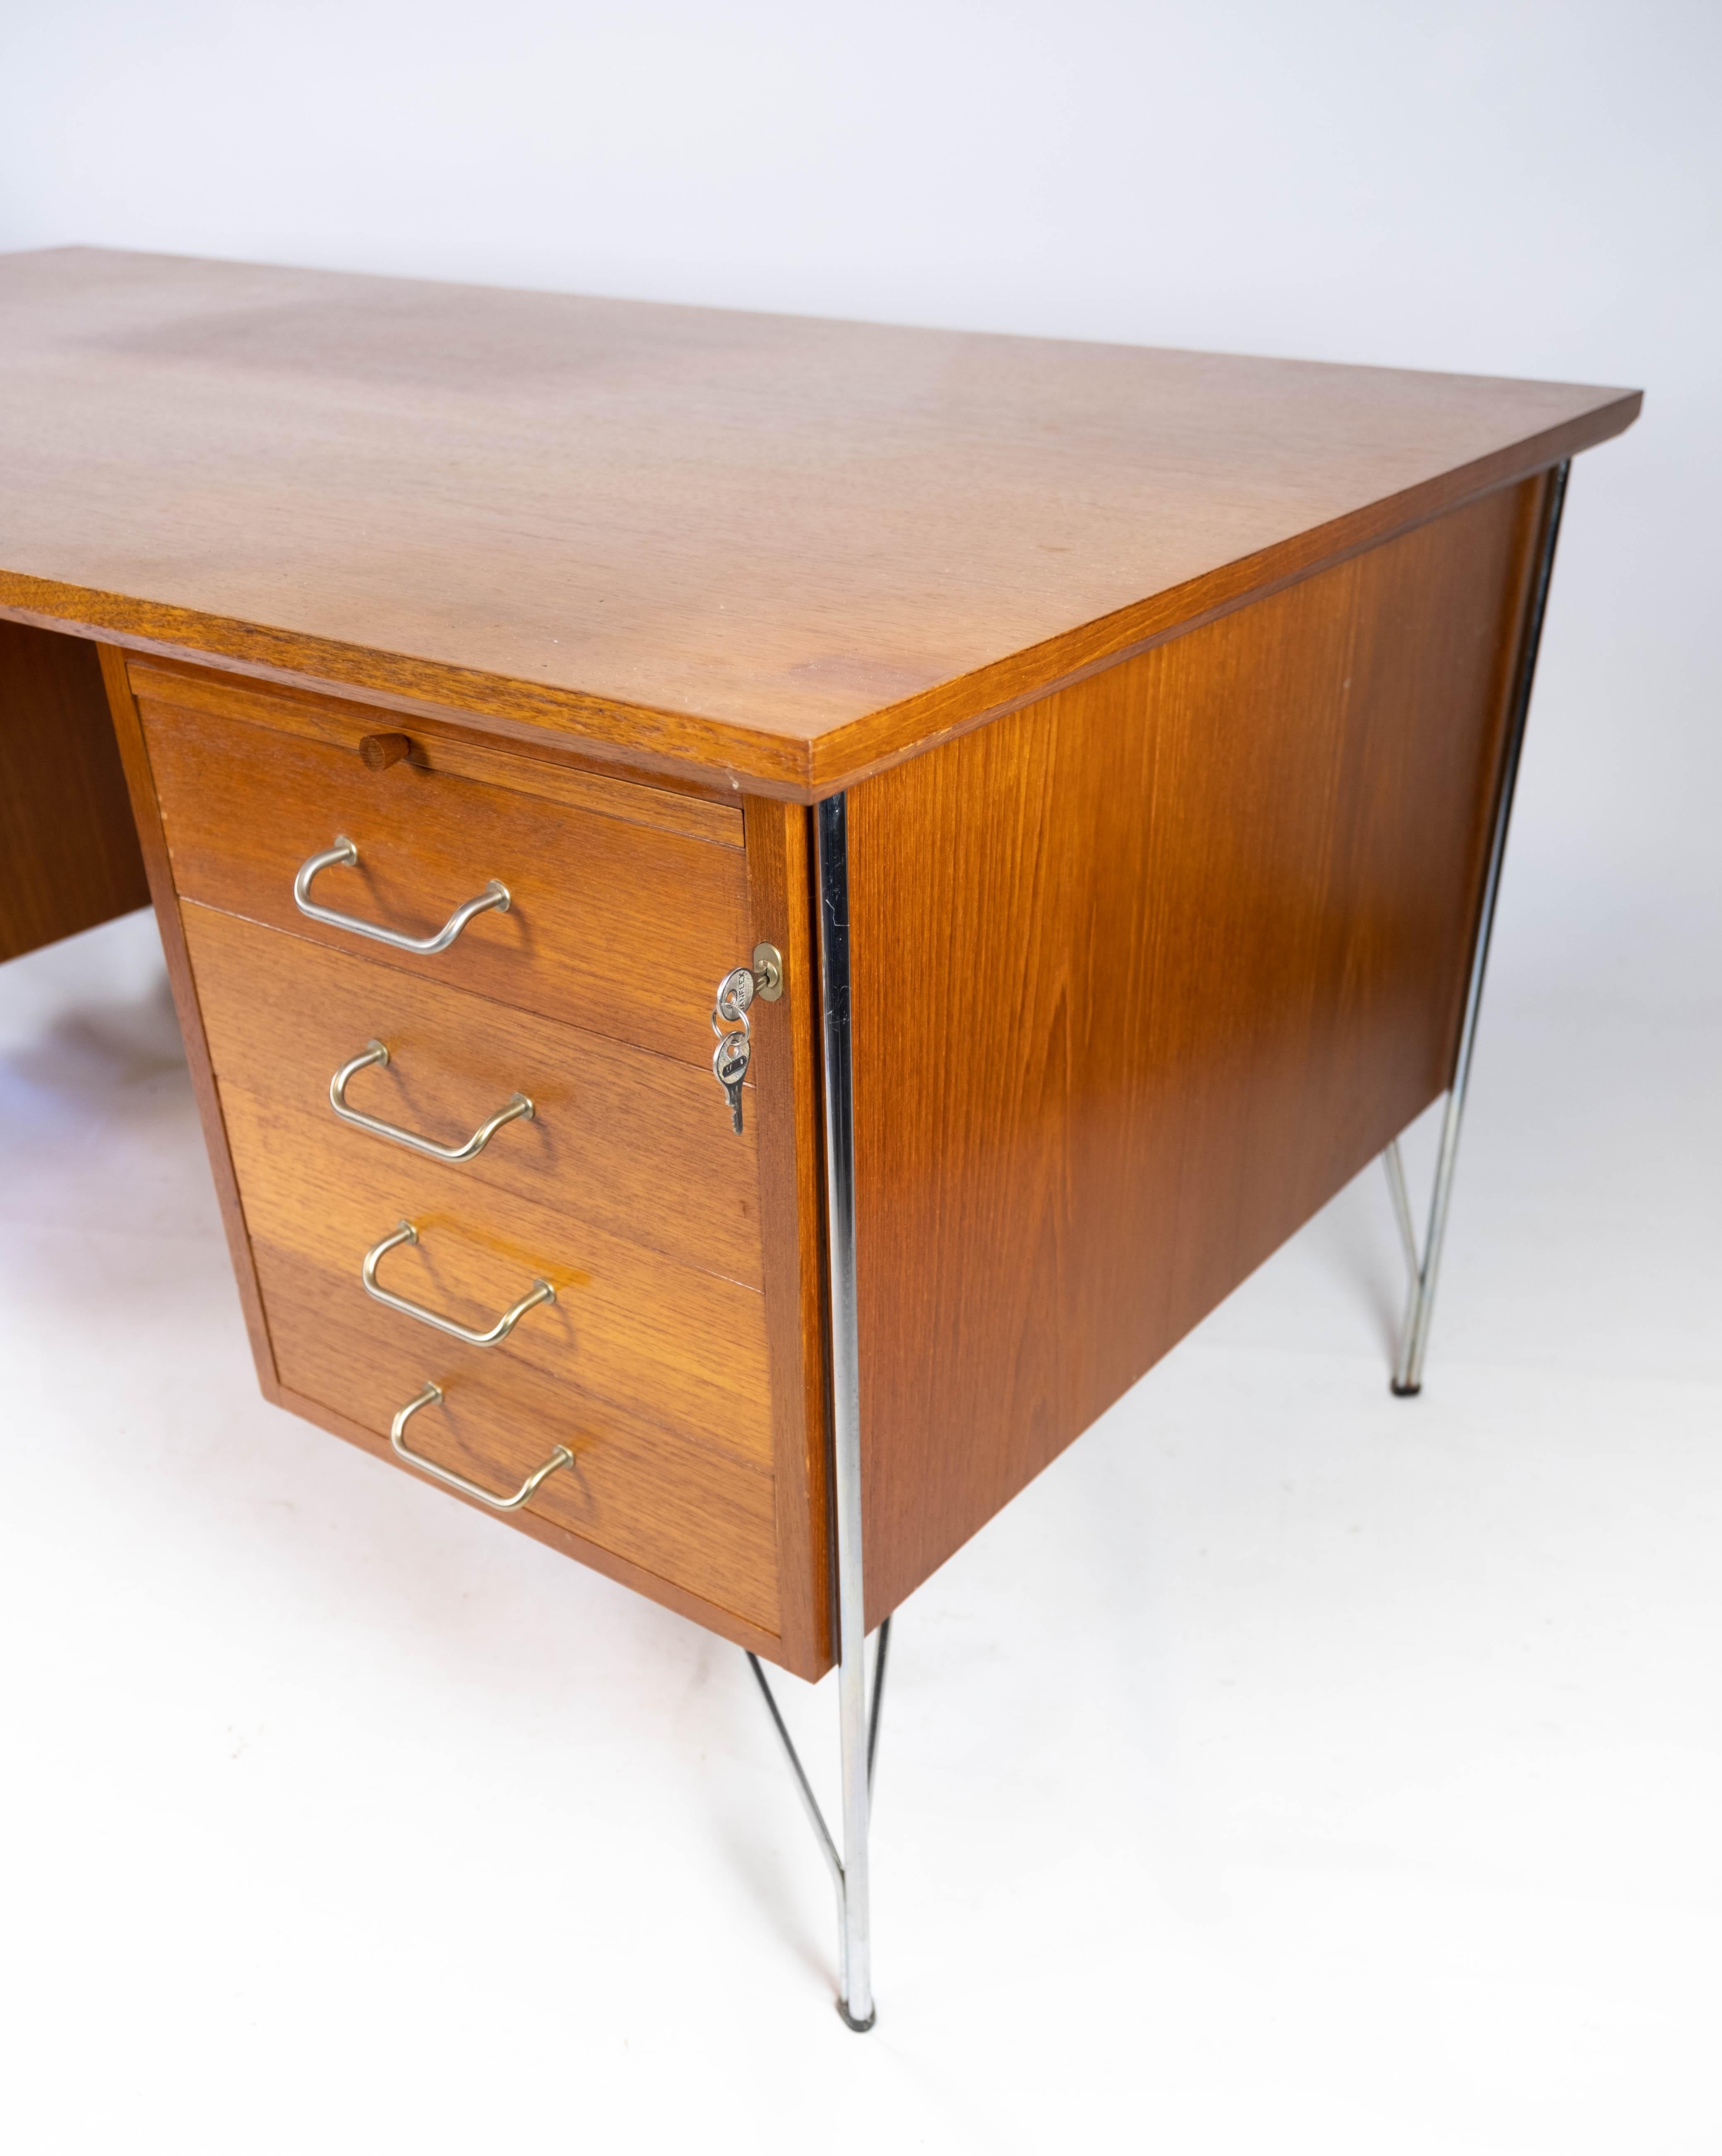 Desk in Teak of Danish Design from the 1970s For Sale 2